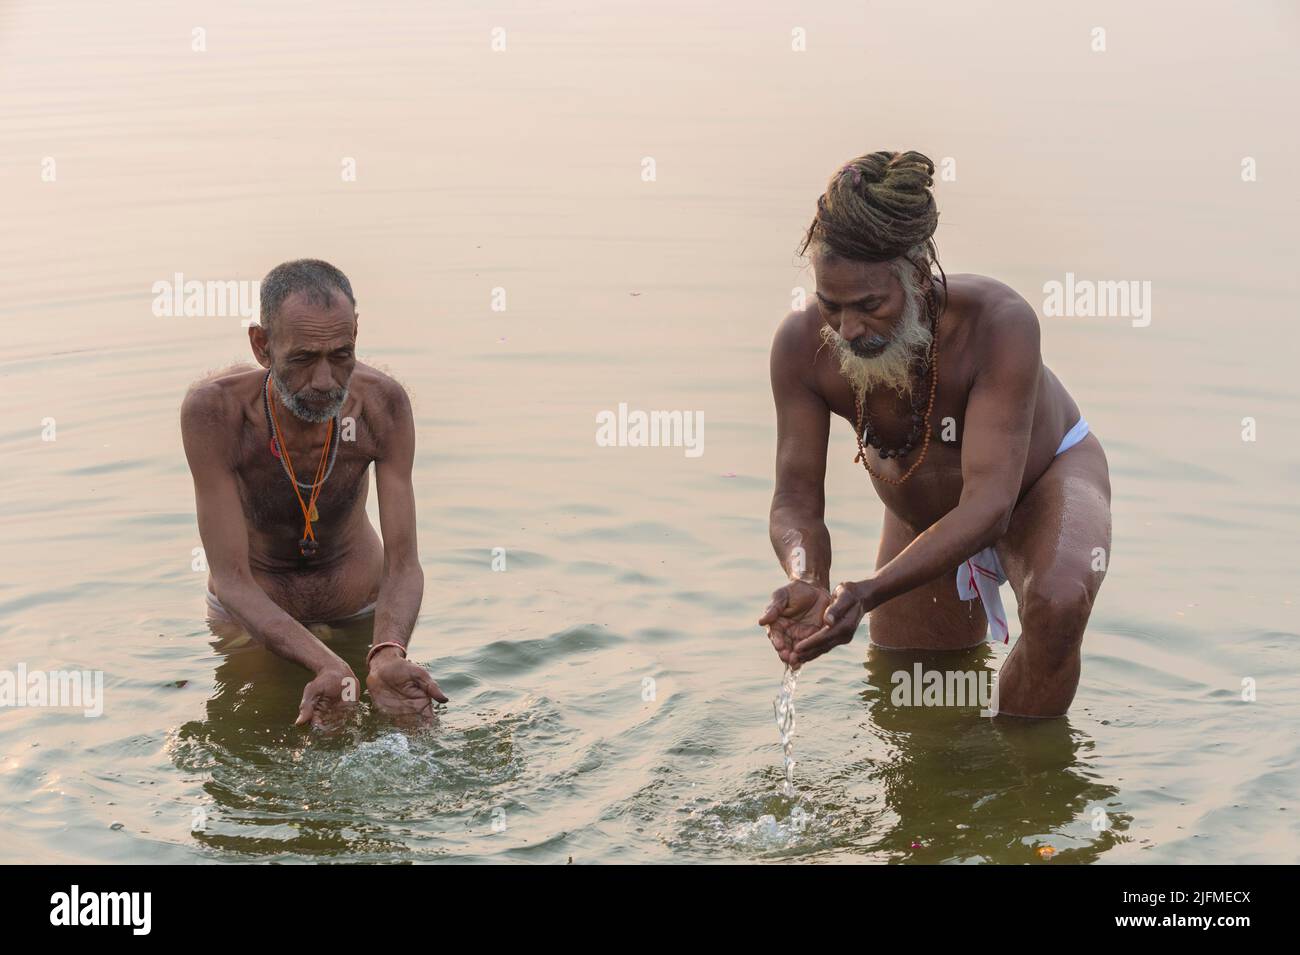 Rome baba and Sadhu bathing in the Ganges River at sunrise, For Editorial Use Only, Allahabad Kumbh Mela, World’s largest religious gathering, Uttar P Stock Photo